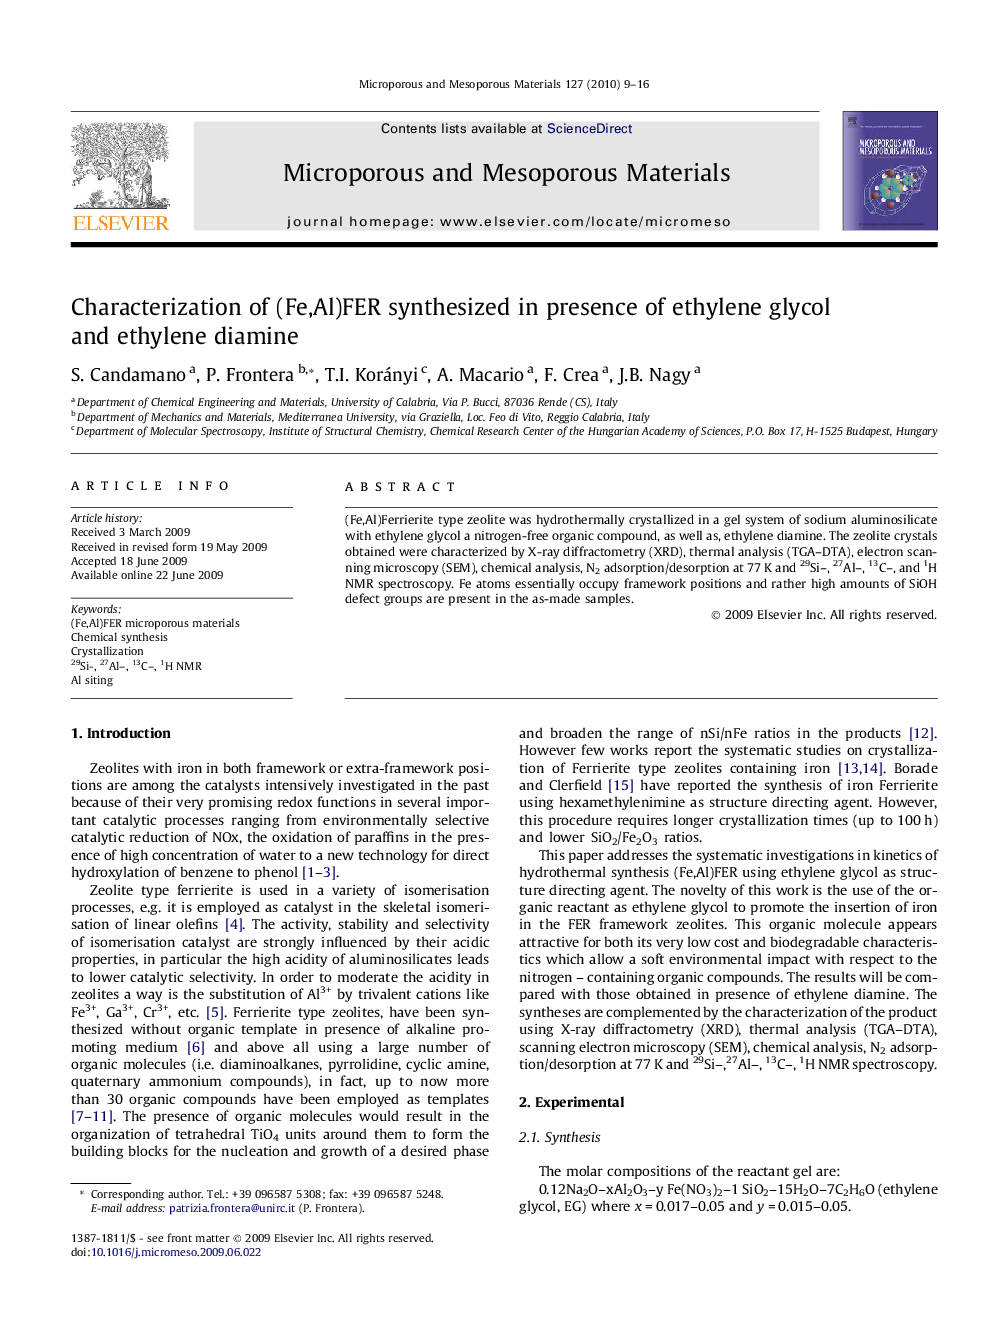 Characterization of (Fe,Al)FER synthesized in presence of ethylene glycol and ethylene diamine